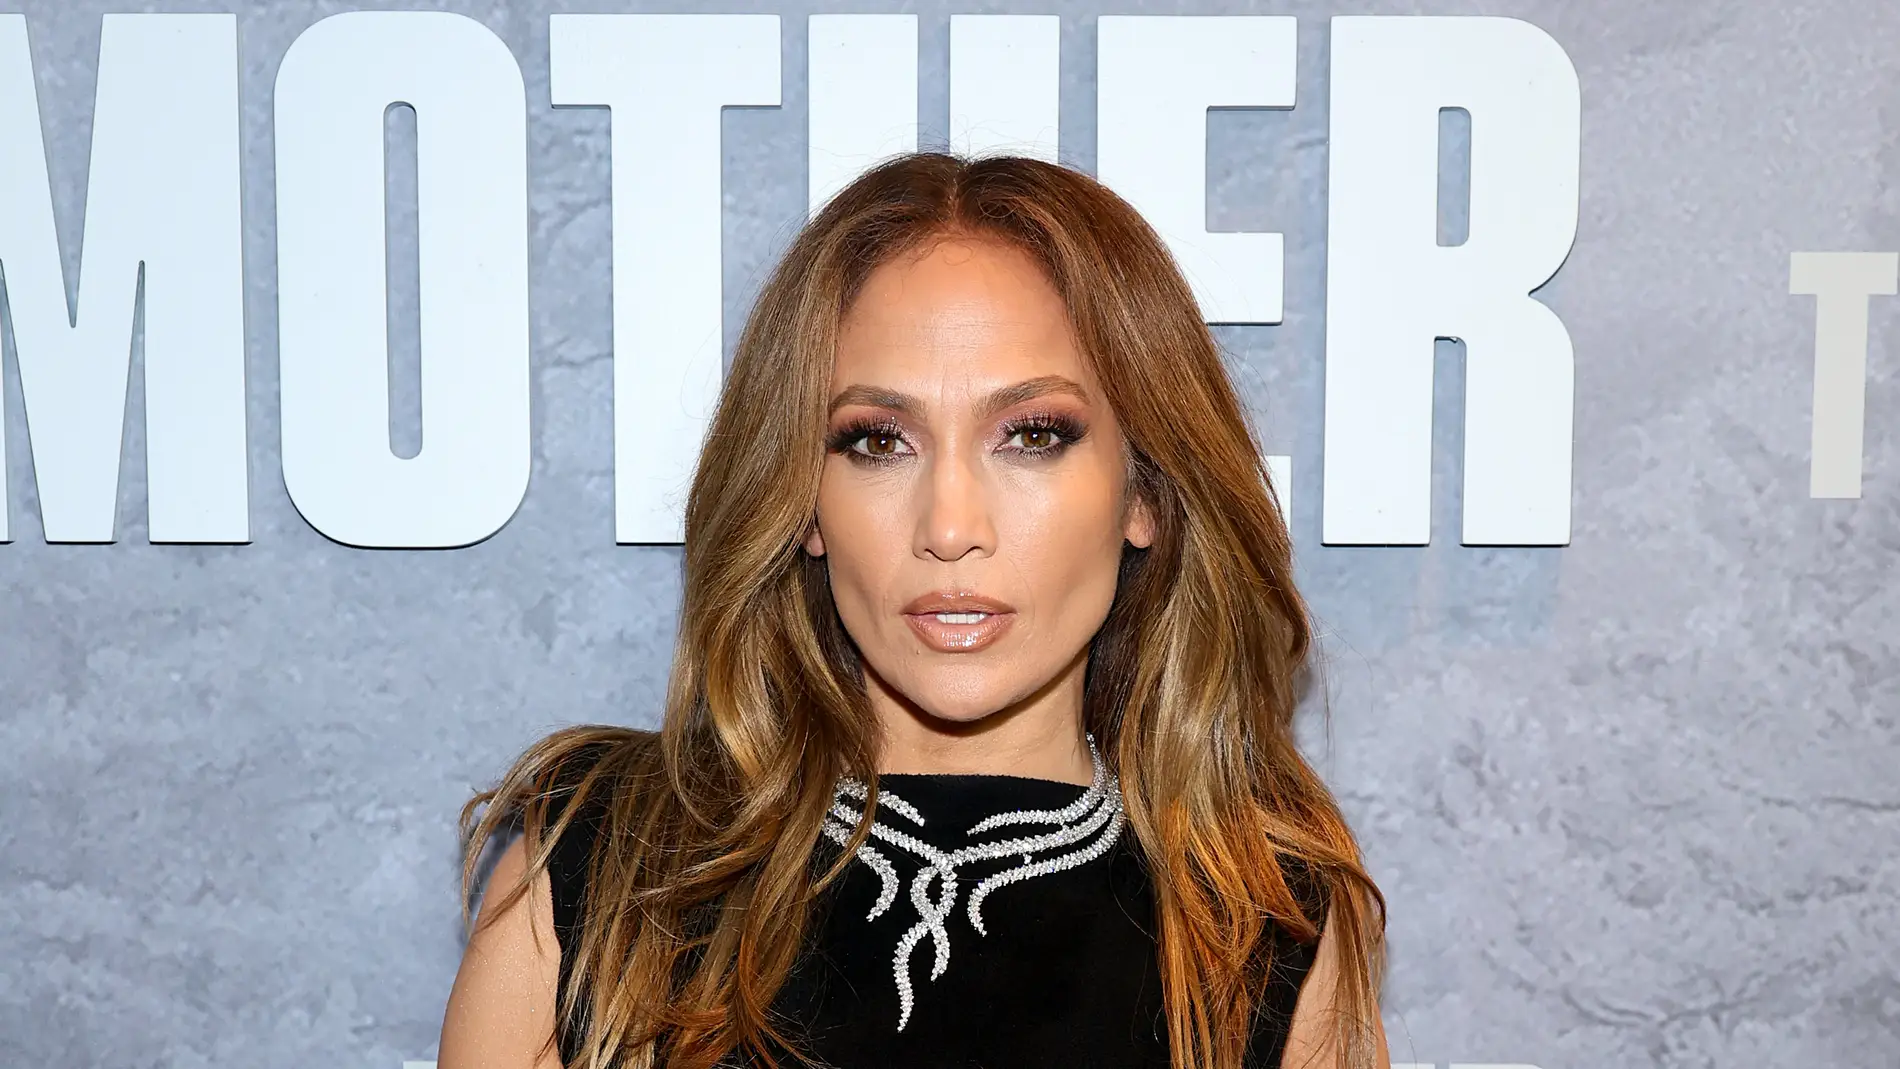 Jennifer Lopez presentando 'La madre' en Nueva York